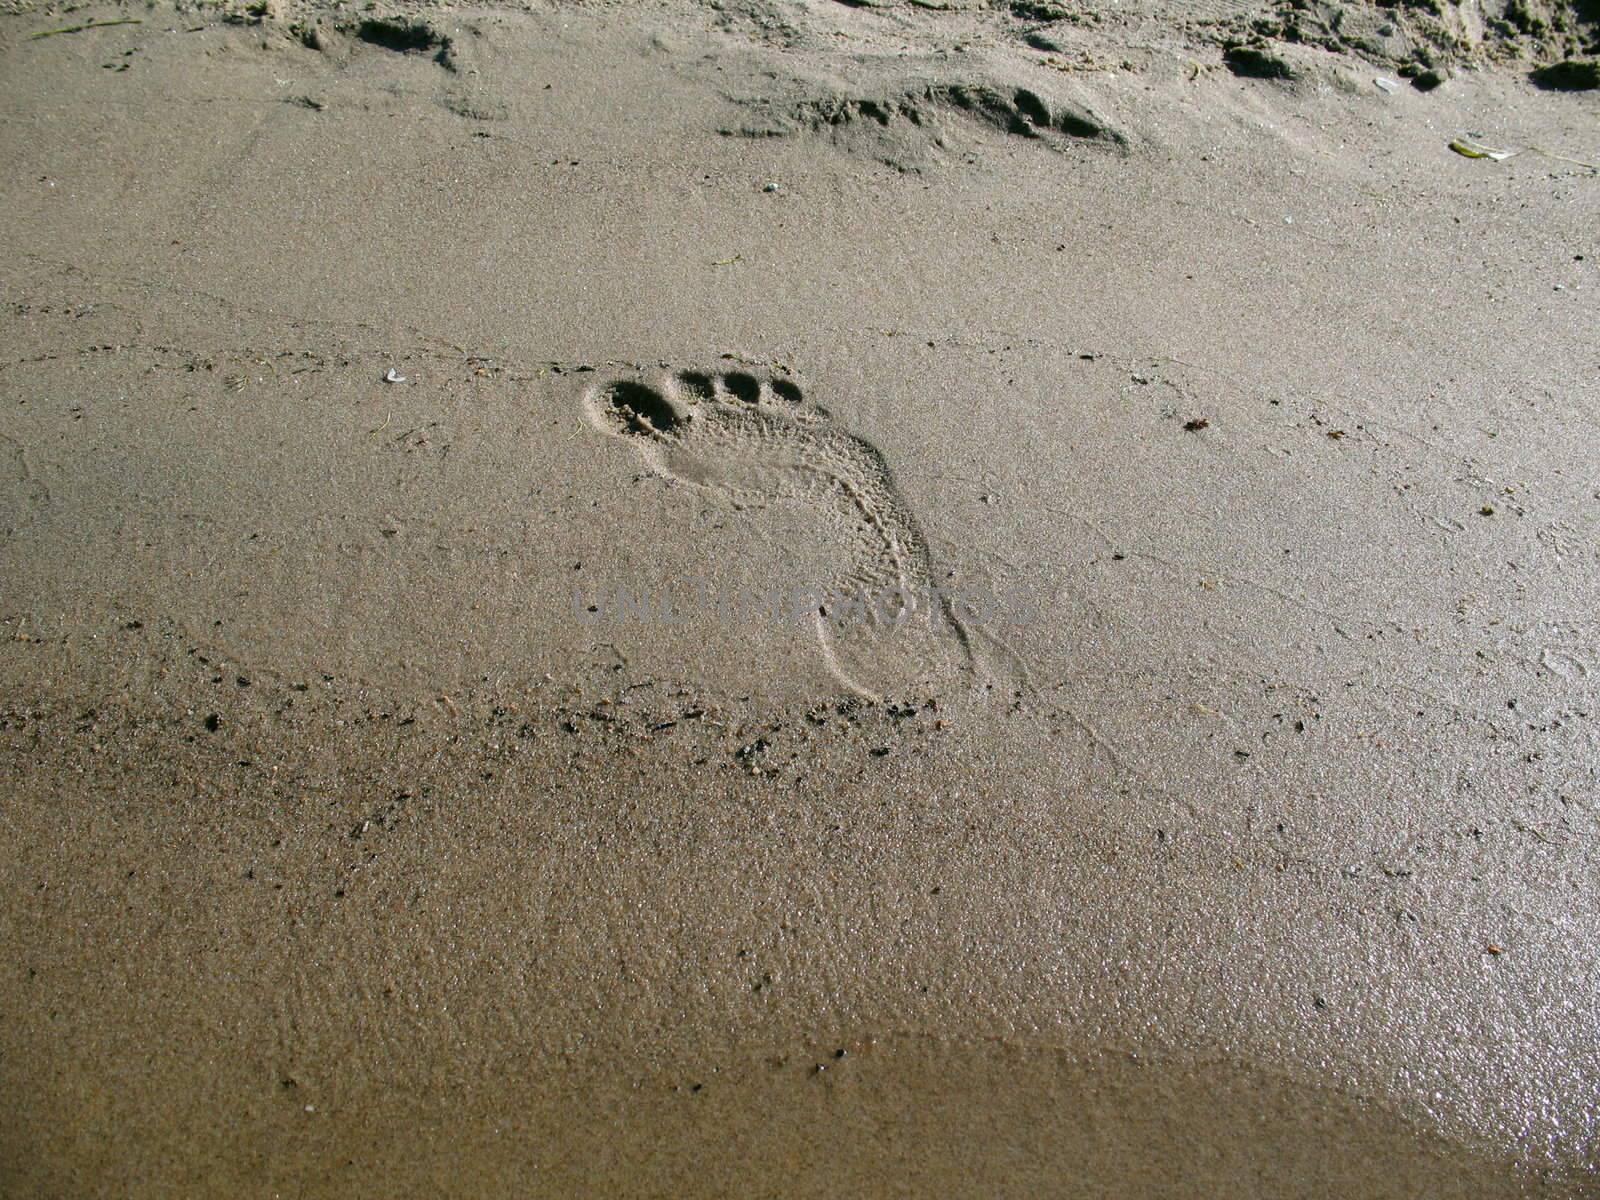 Human footprint on river sand beach.